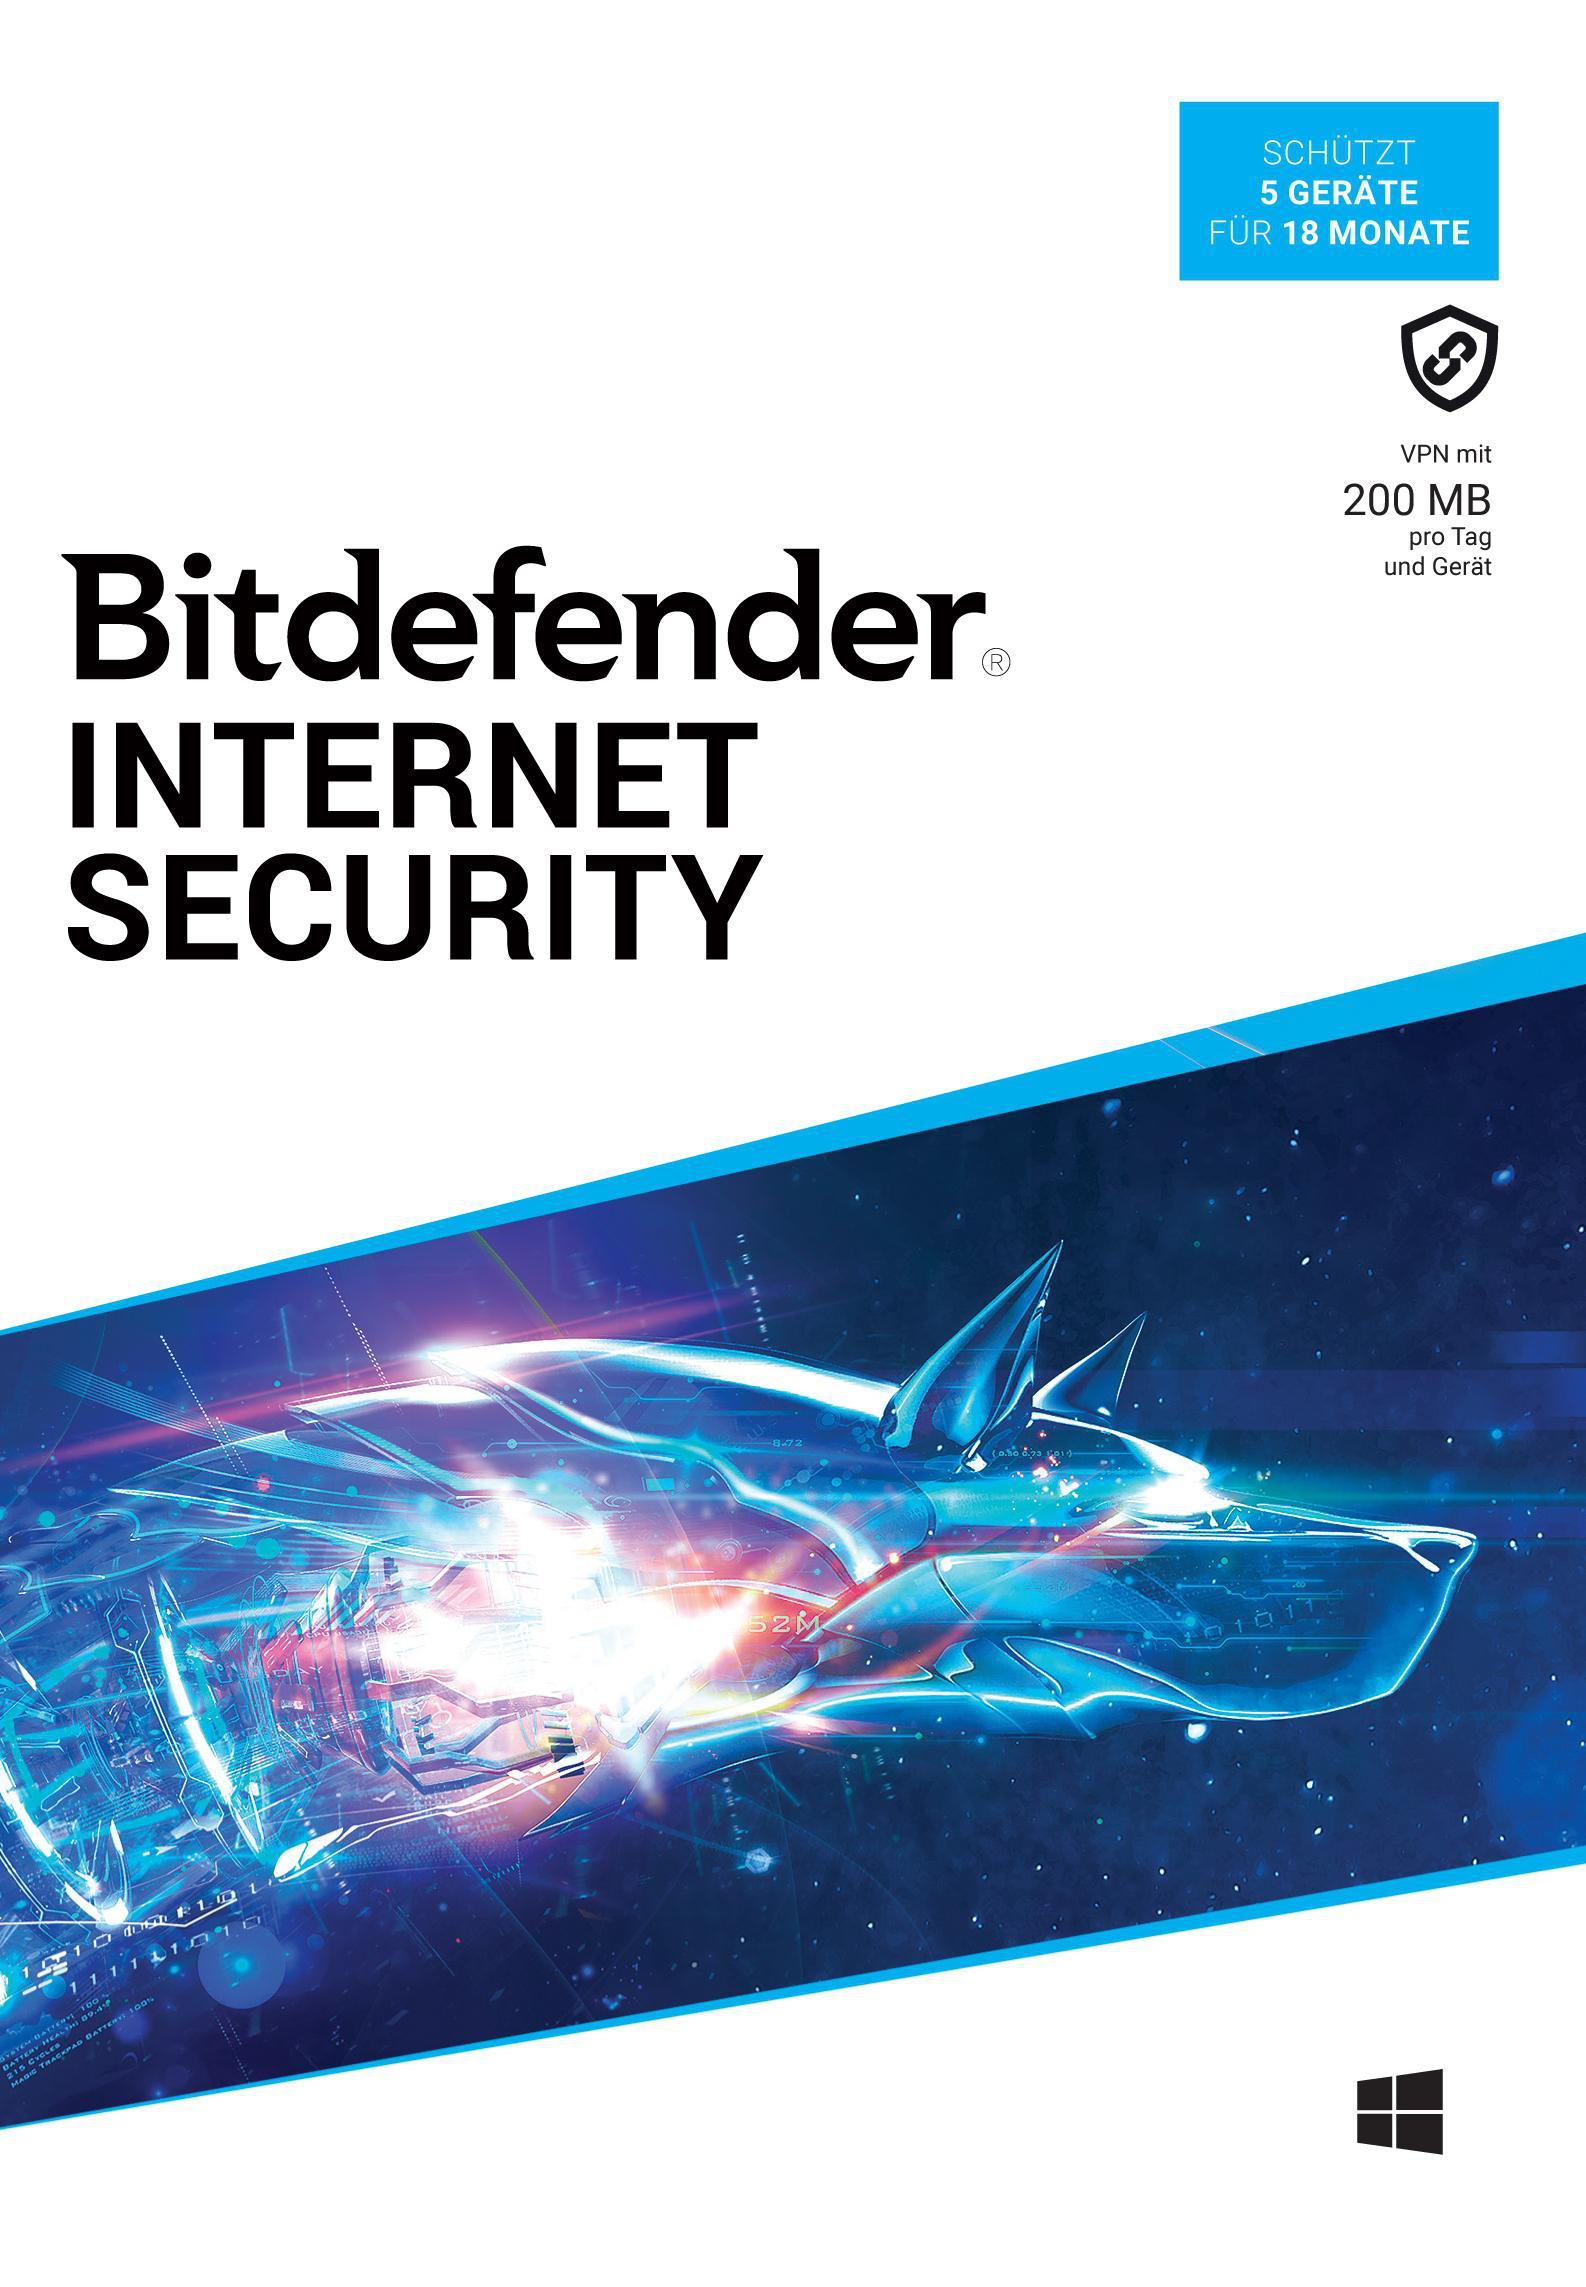 Bitdefender Internet a (Code Box) - in Security / 18 5 [PC] Monate Geräte